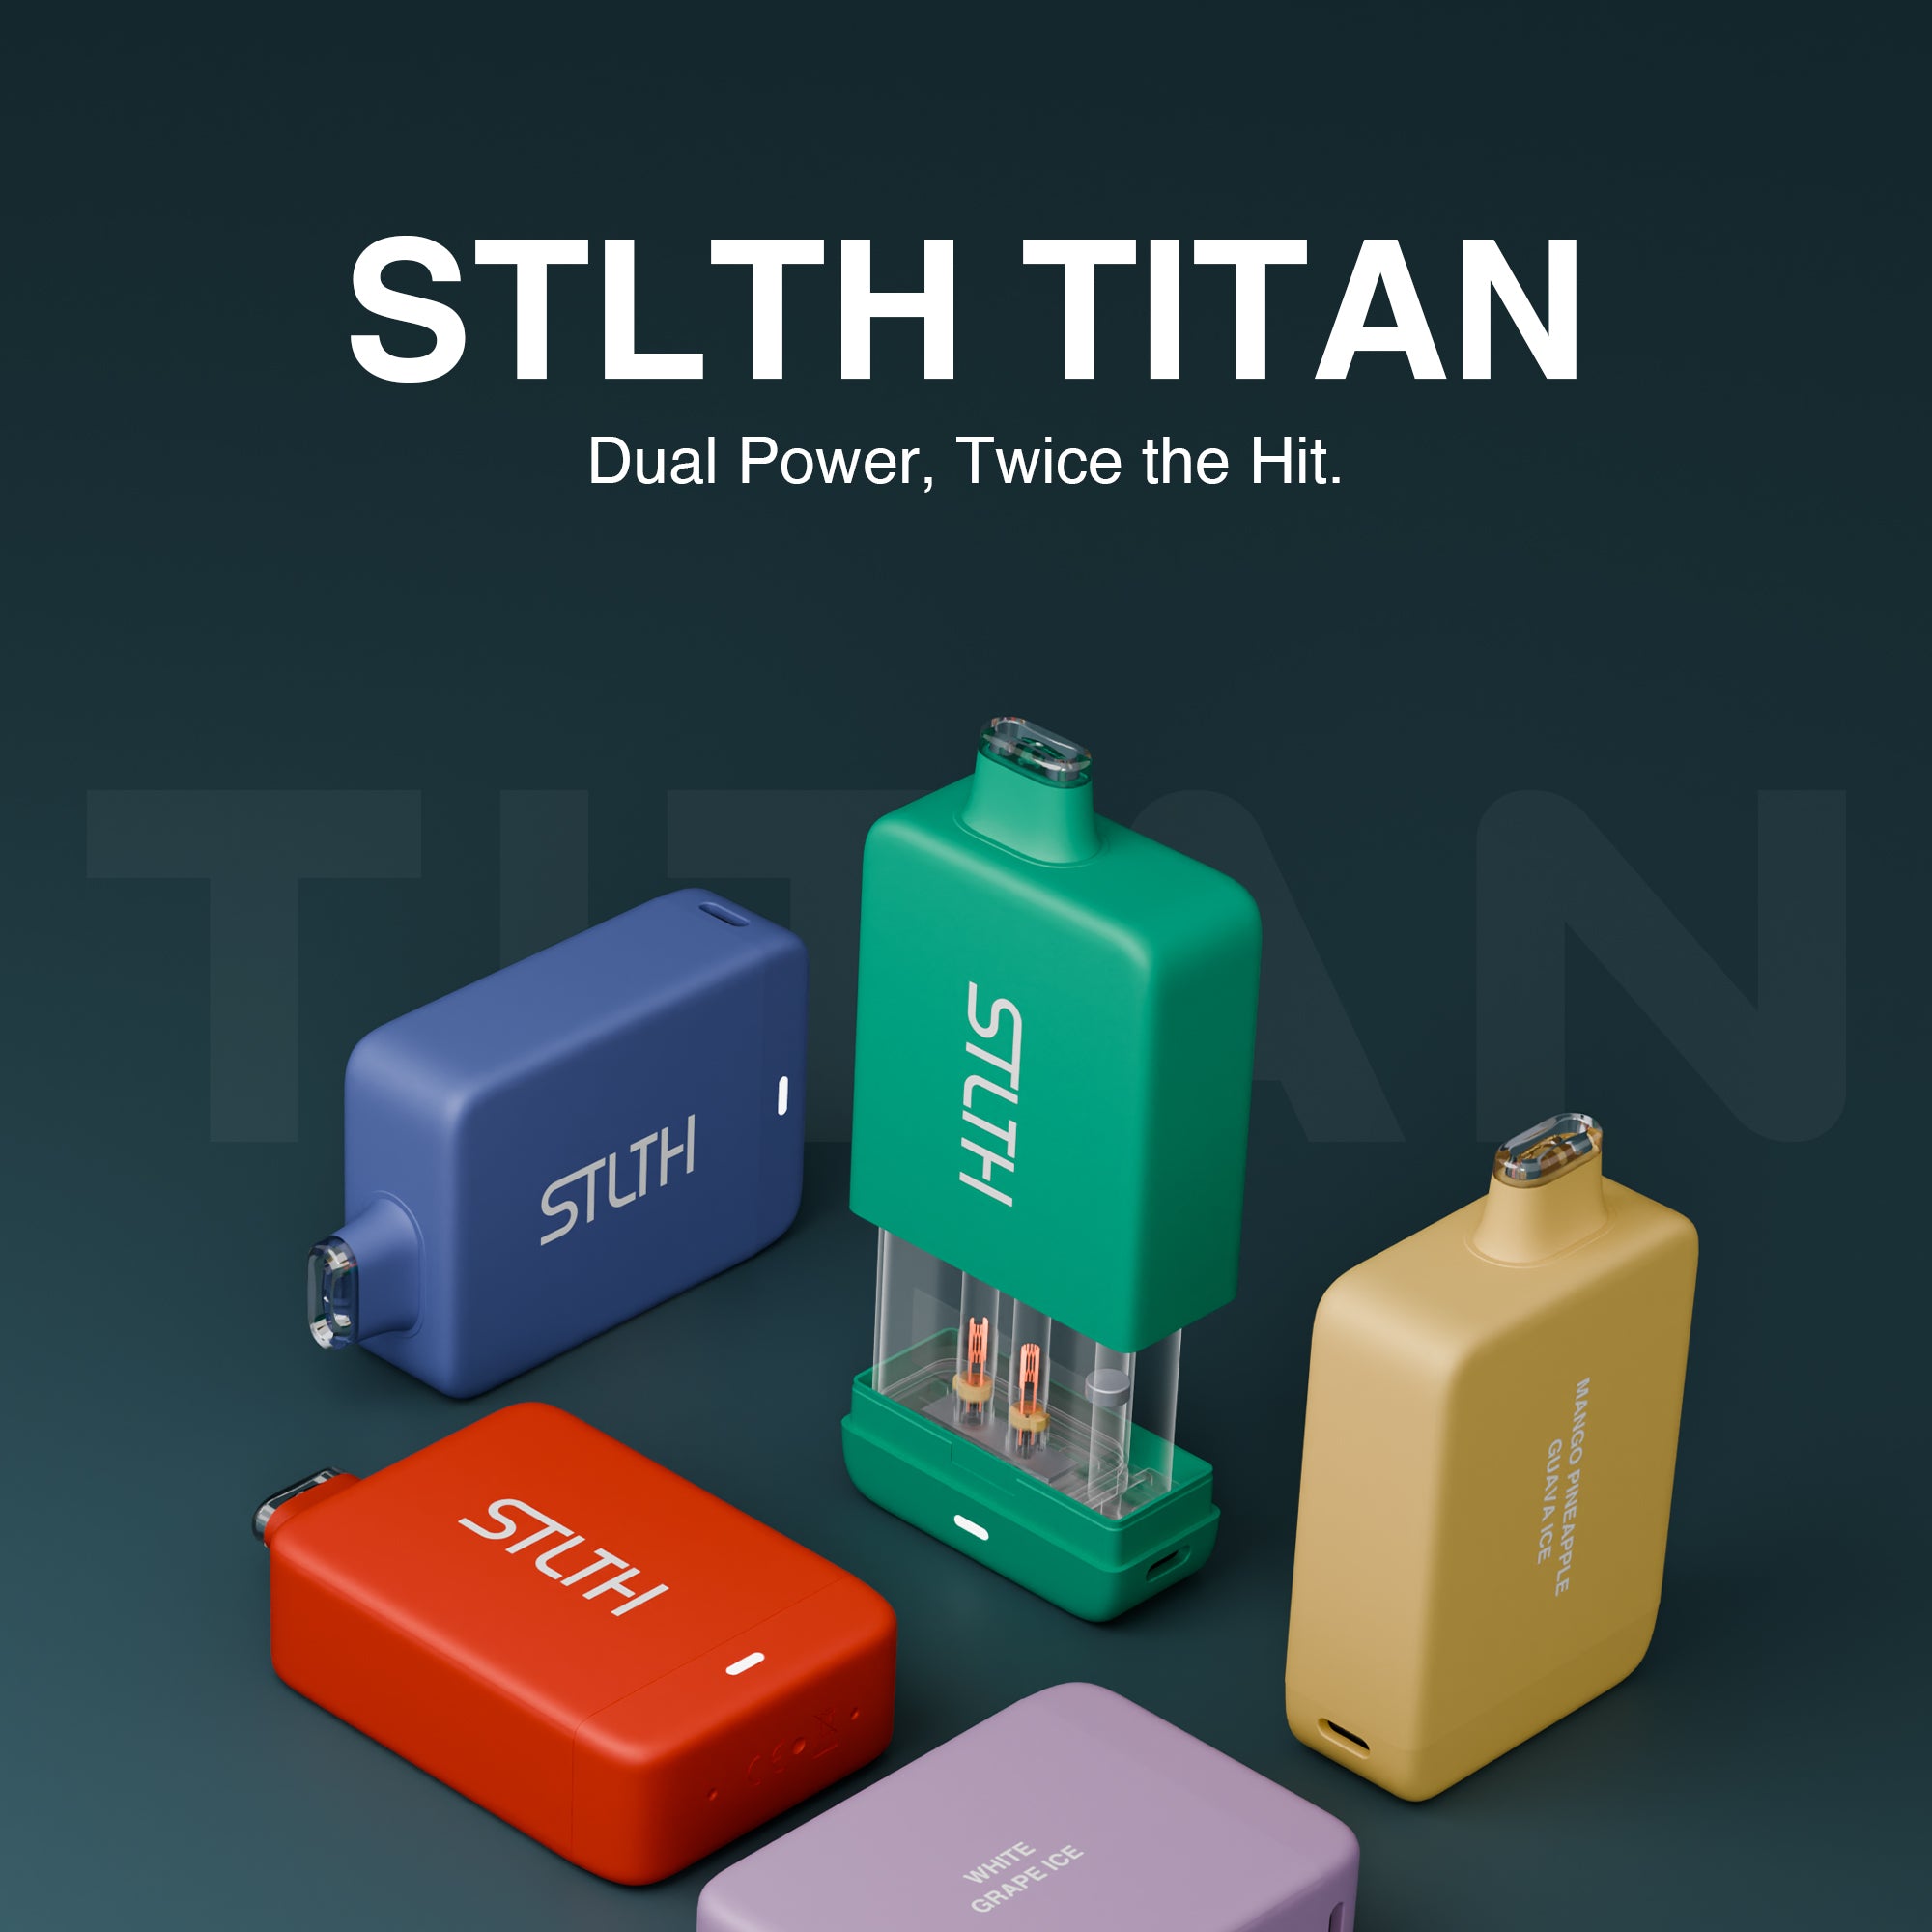 STLTH TITAN: Dual Power, Twice the Hit.